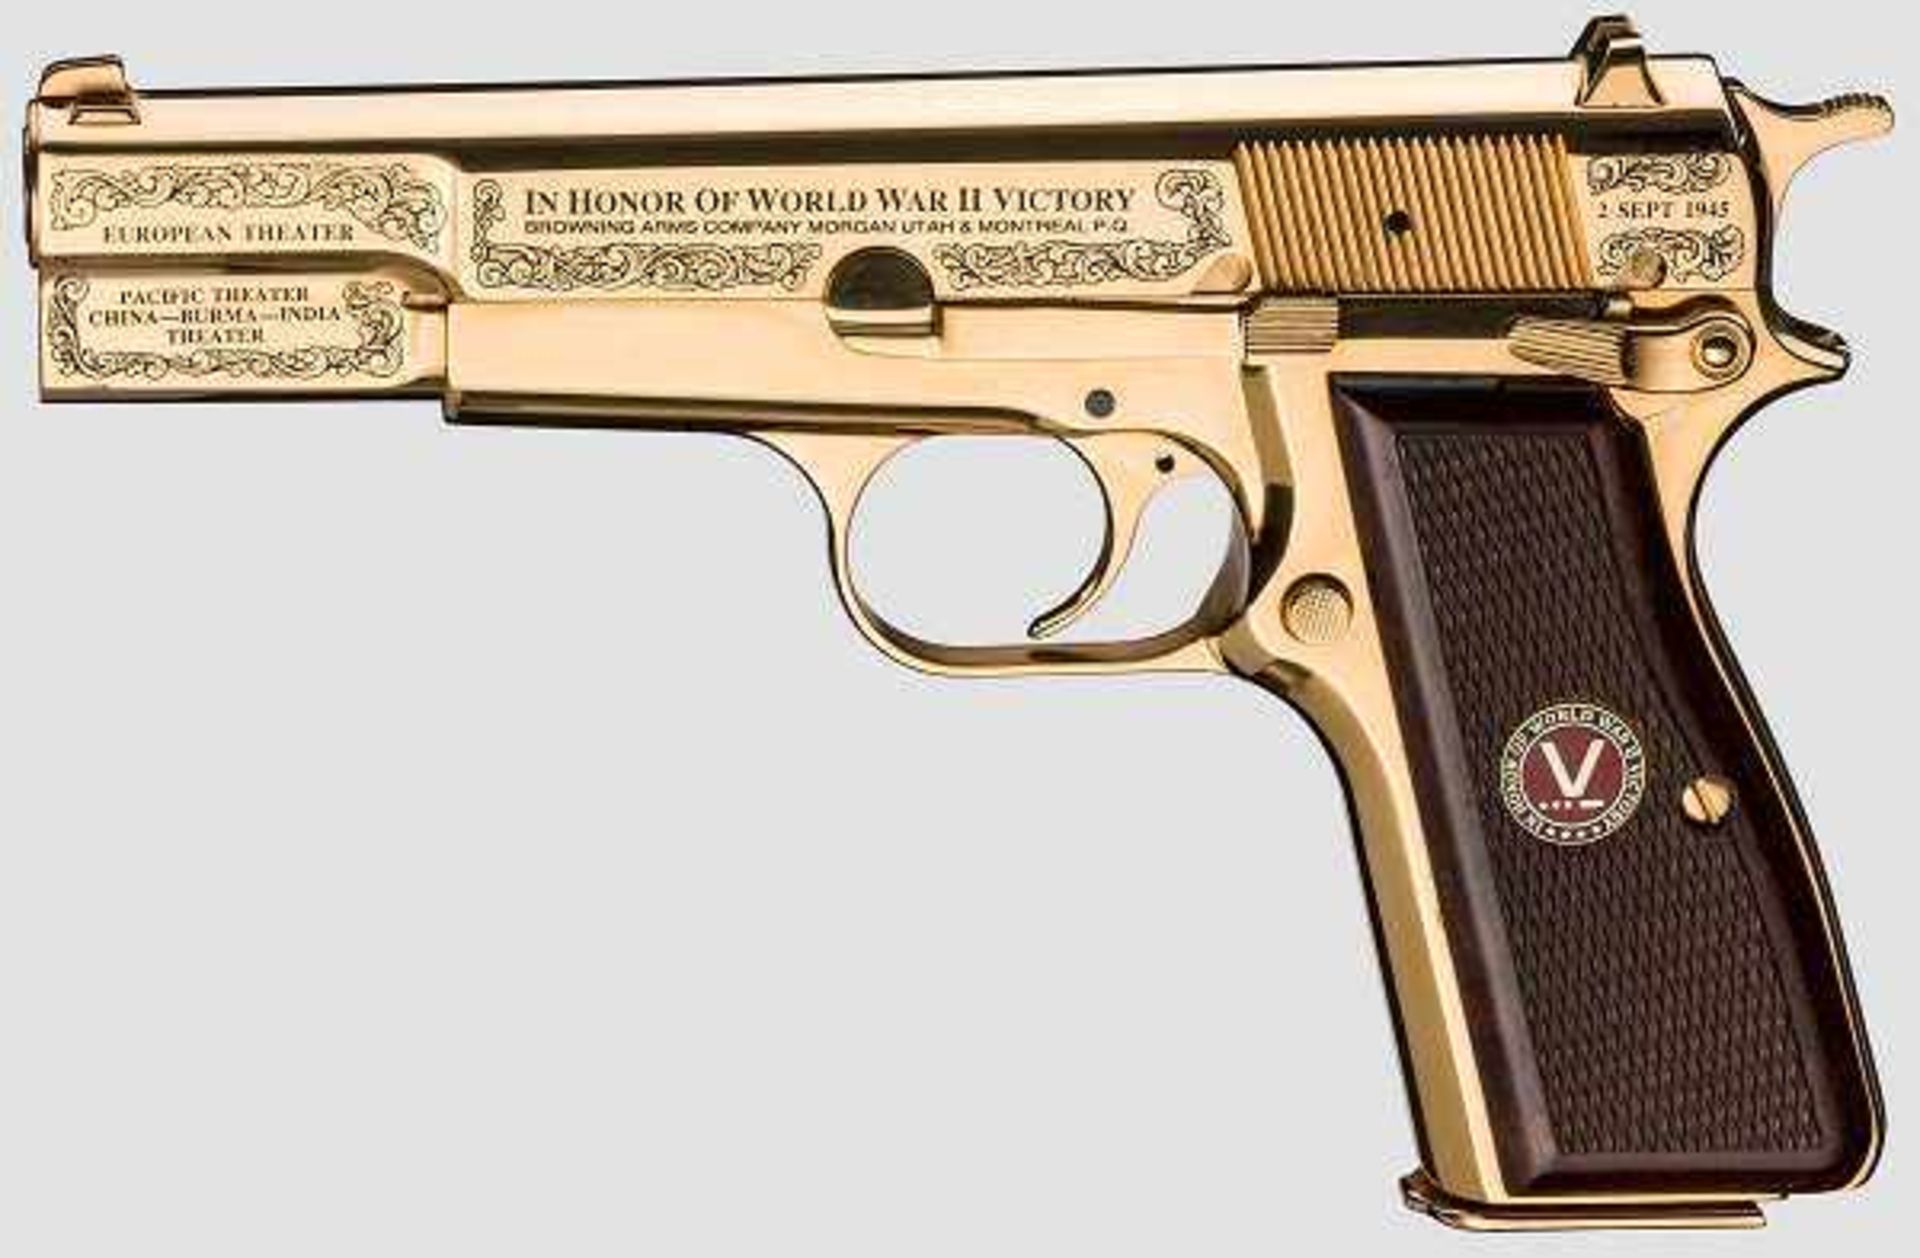 FN HP, Commemorative World War II, vergoldet, in Schatulle Kal. 9 mm Luger, Nr. 245NW83332 /